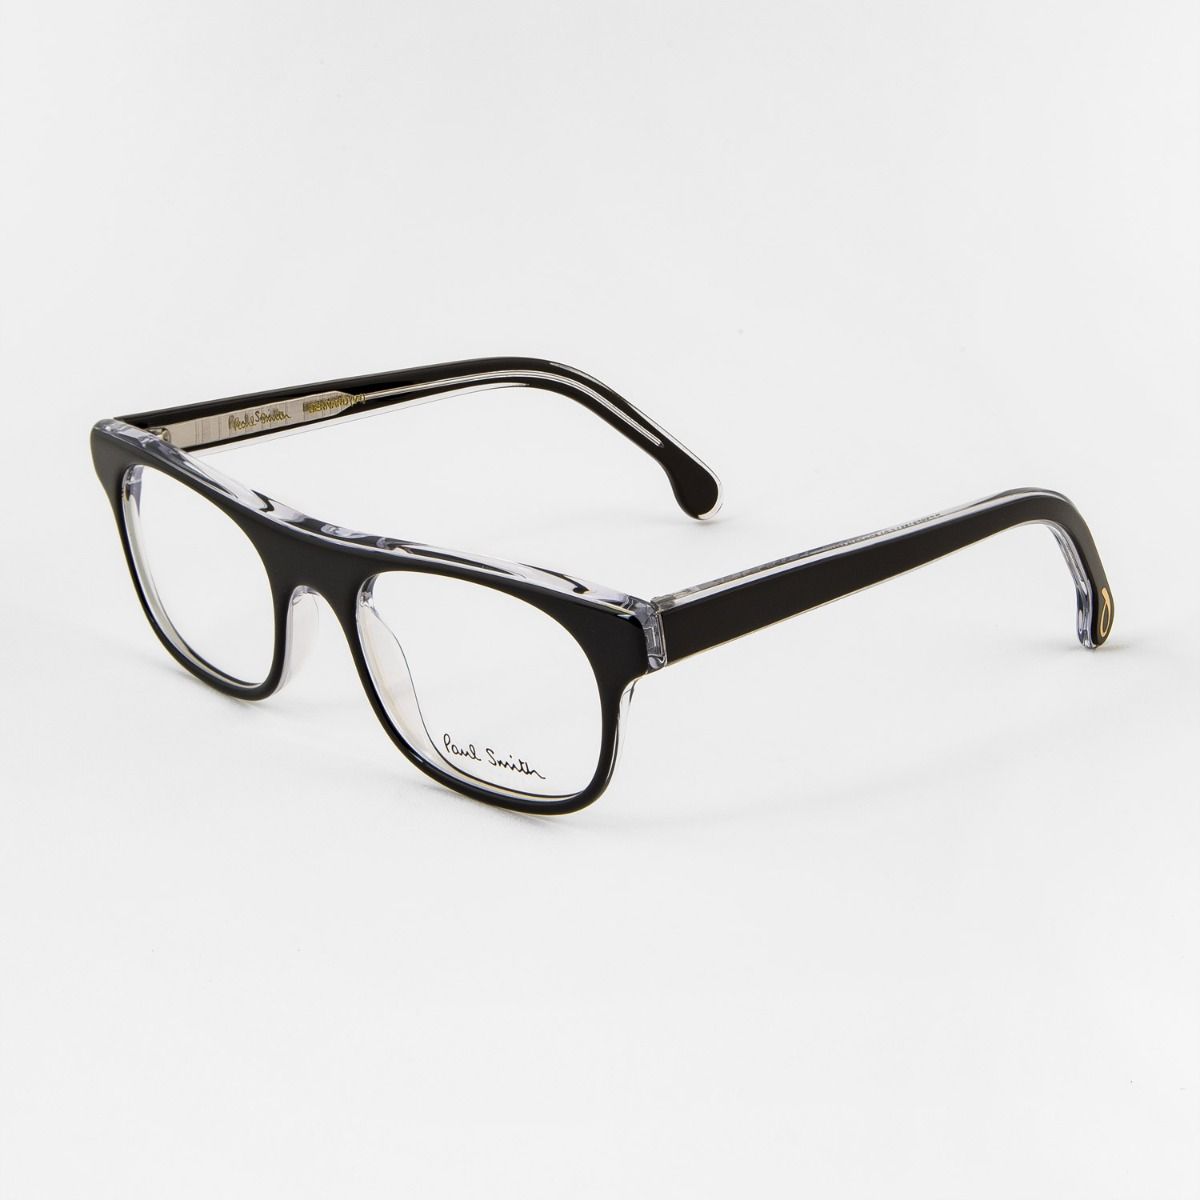 Paul Smith Bernard Optical Rectangle Glasses (Small)